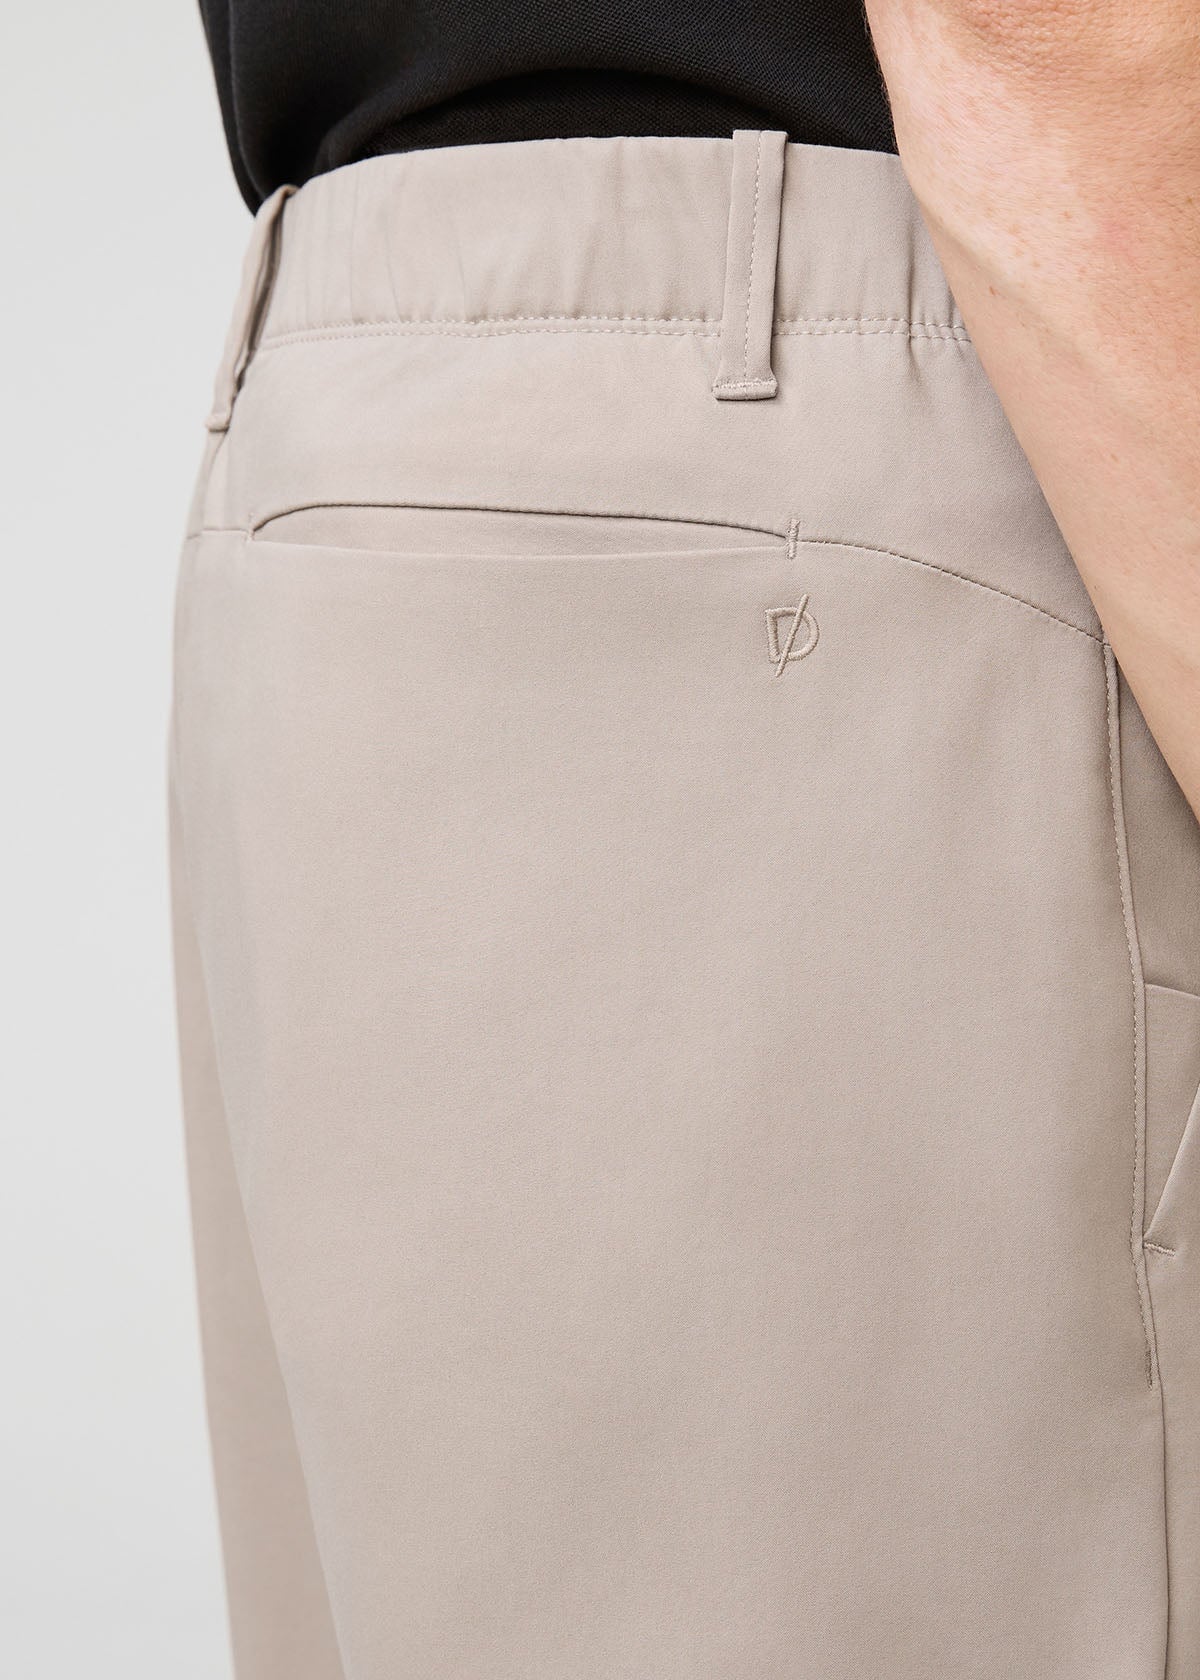 mens light khaki stretch flex pant back waistband and pocket